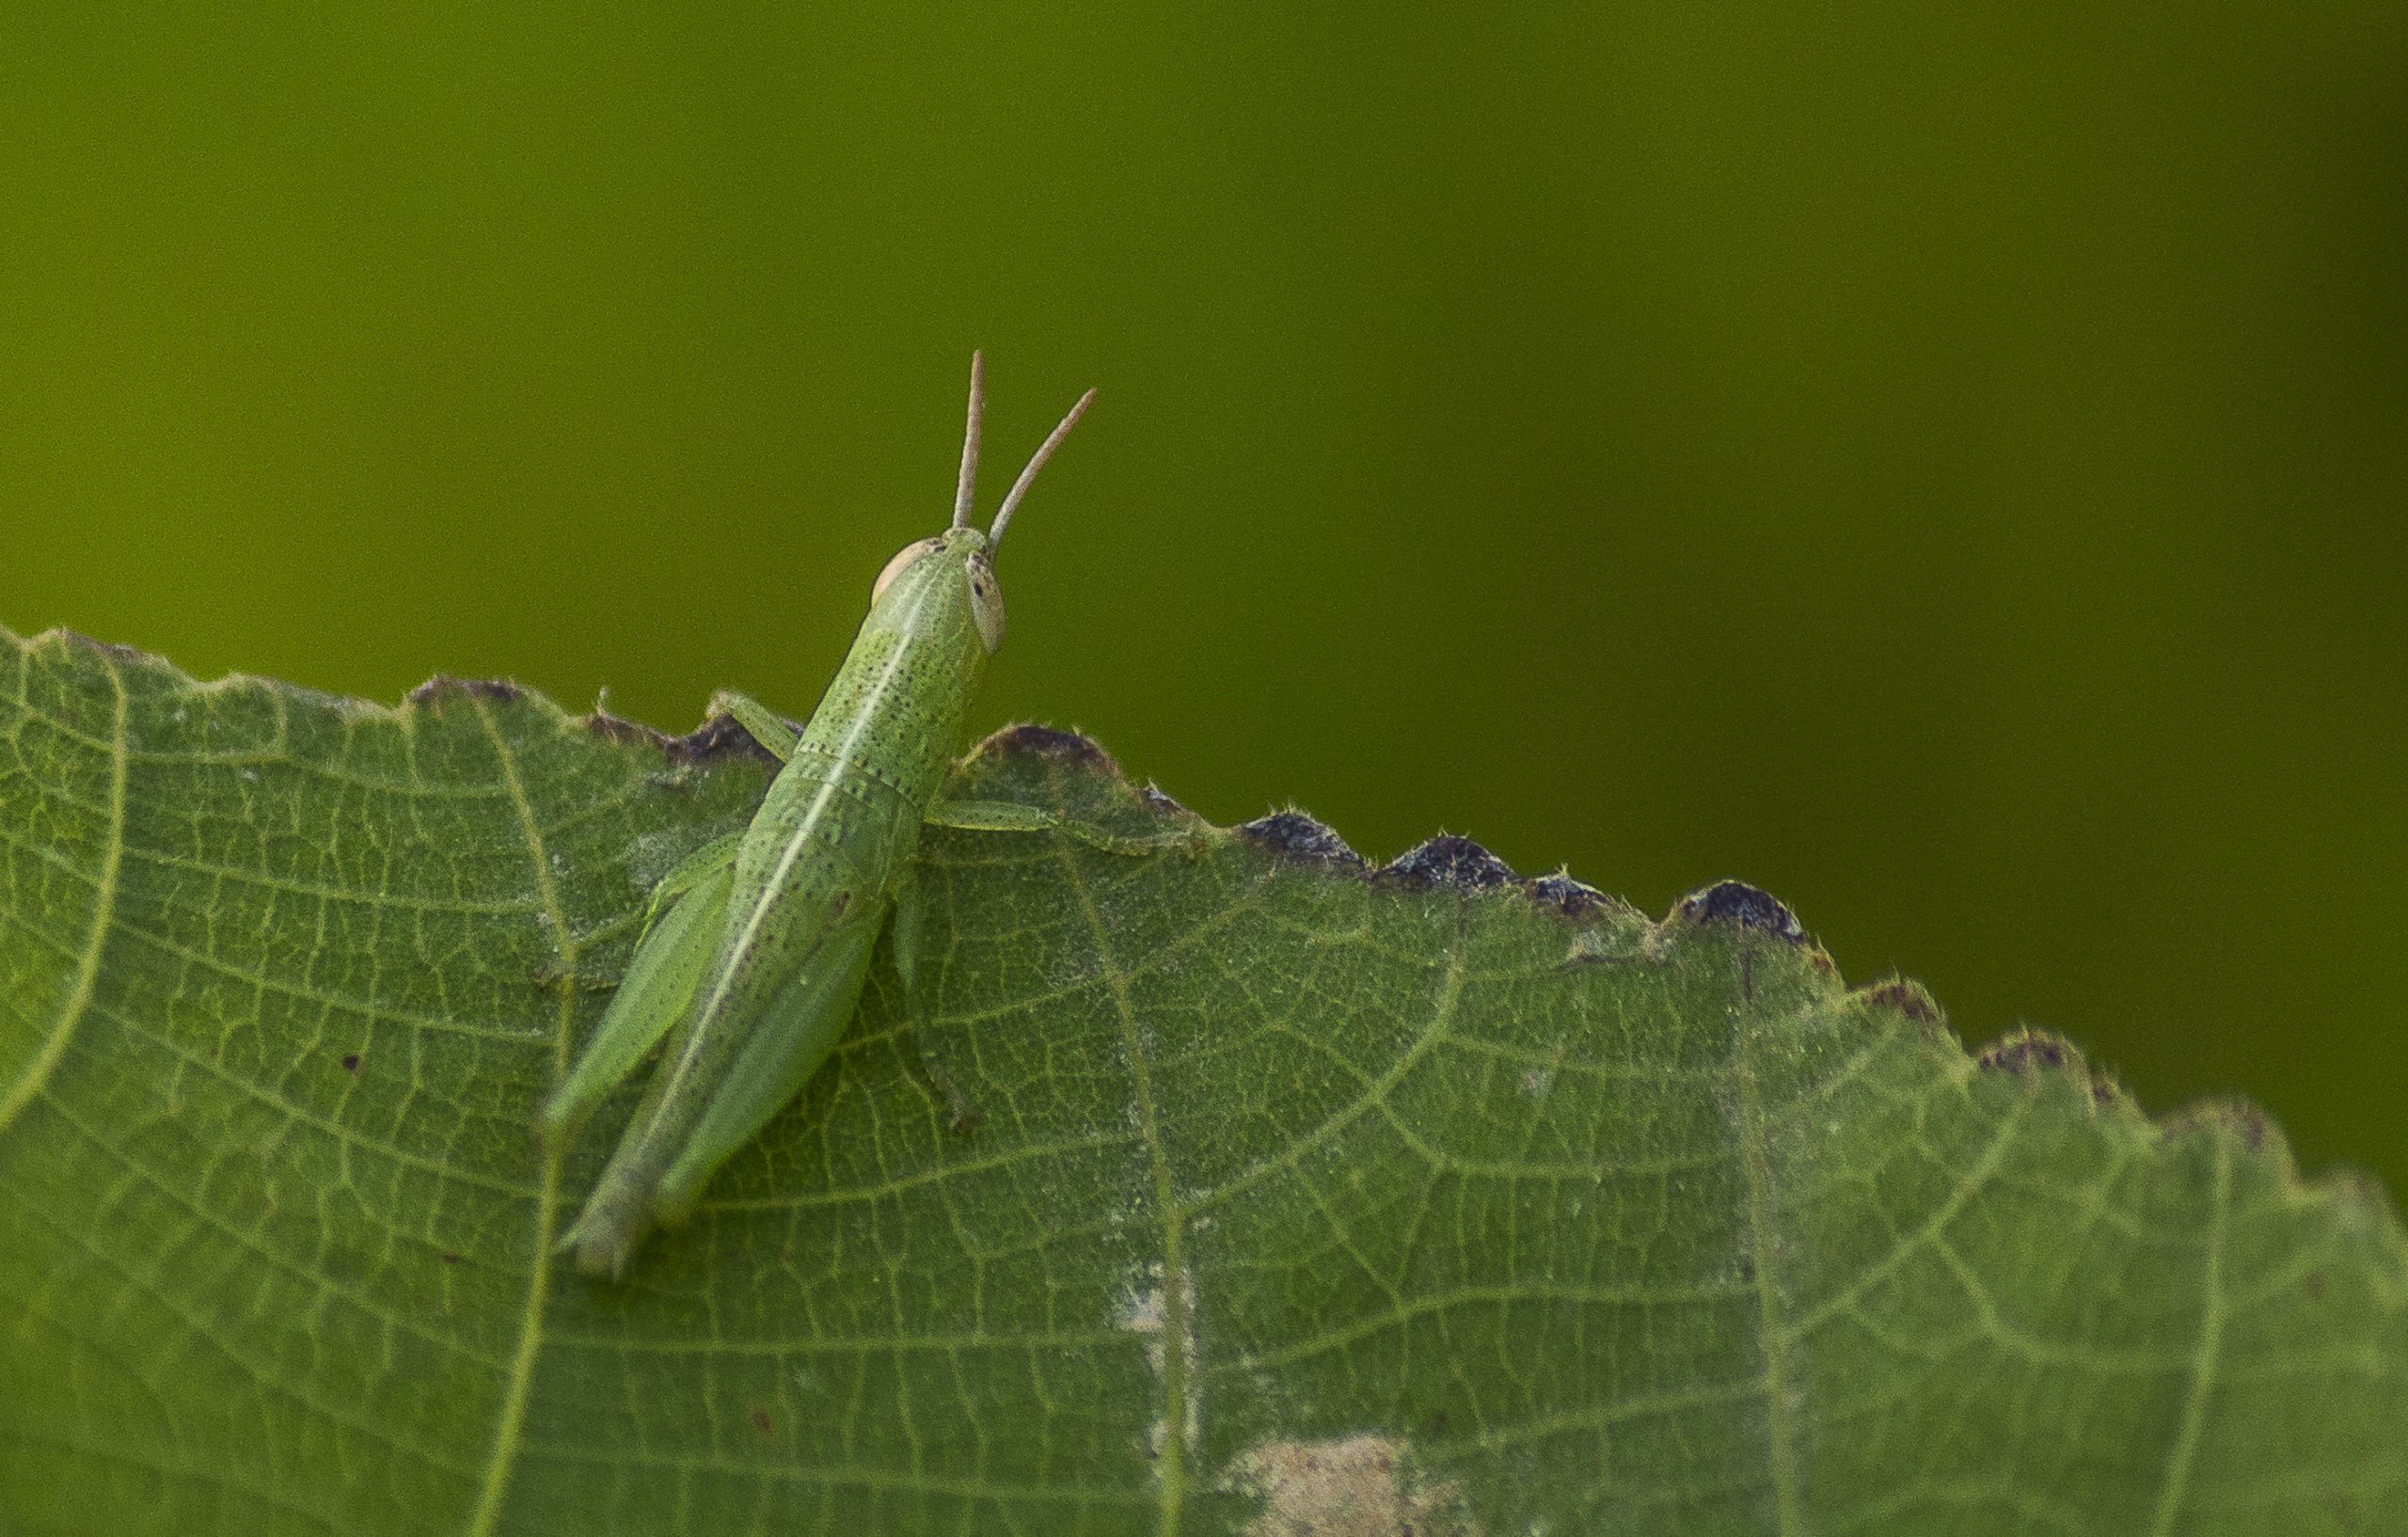 Grasshopper on plant leaf